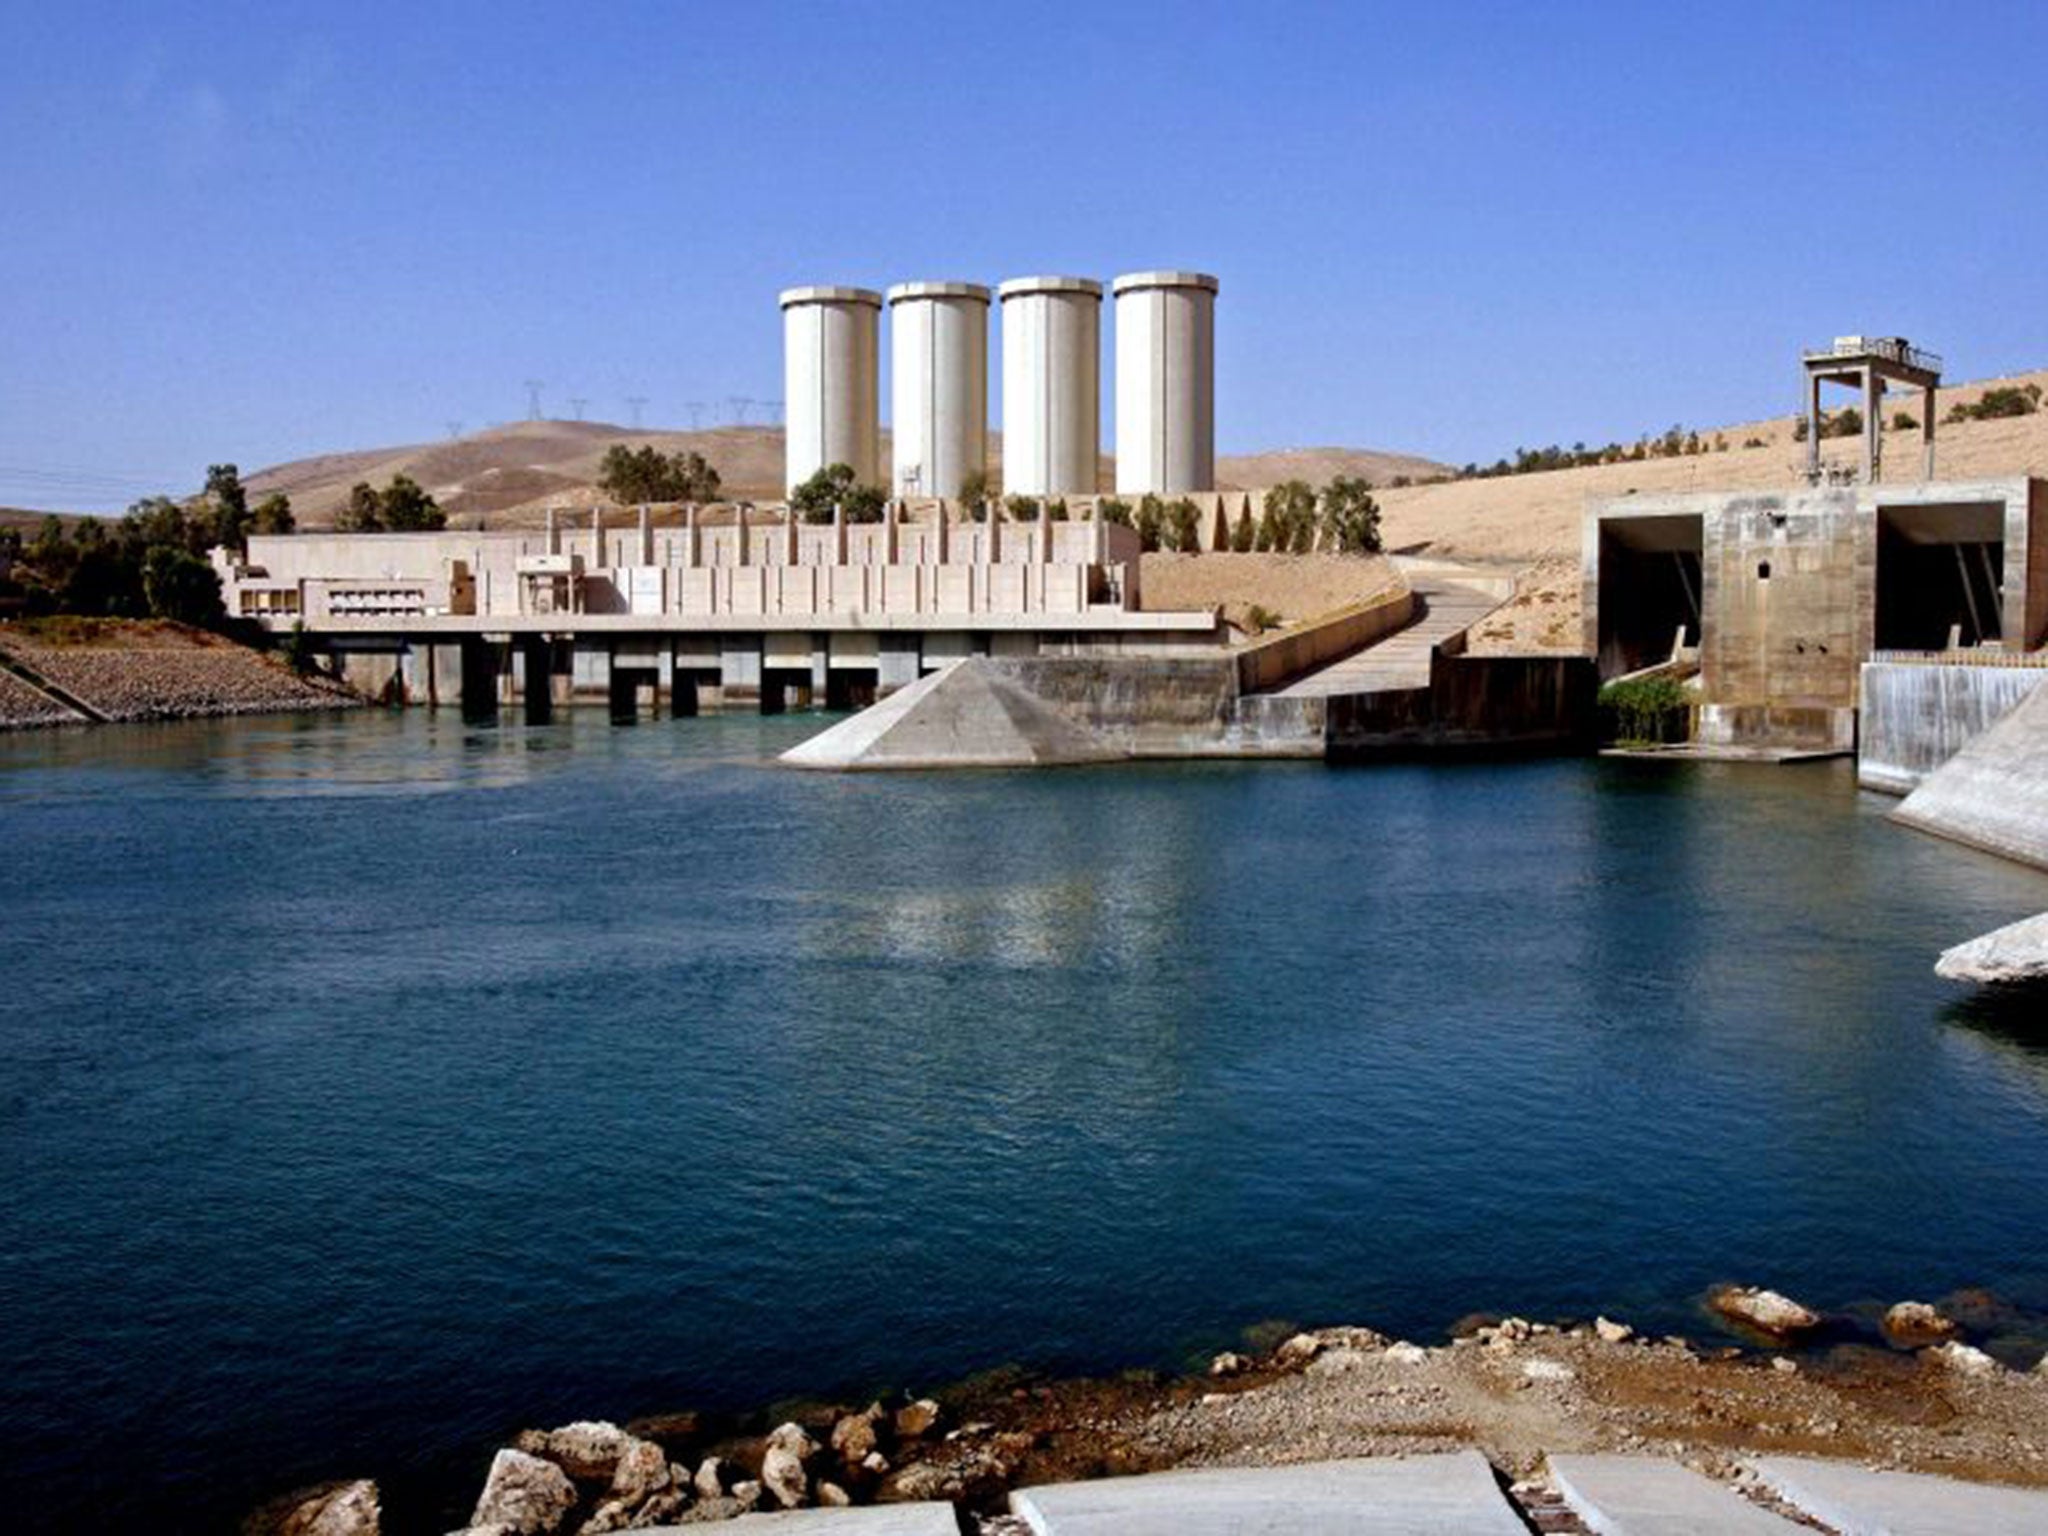 The Mosul dam lies 225 miles northwest of Baghdad (AP)